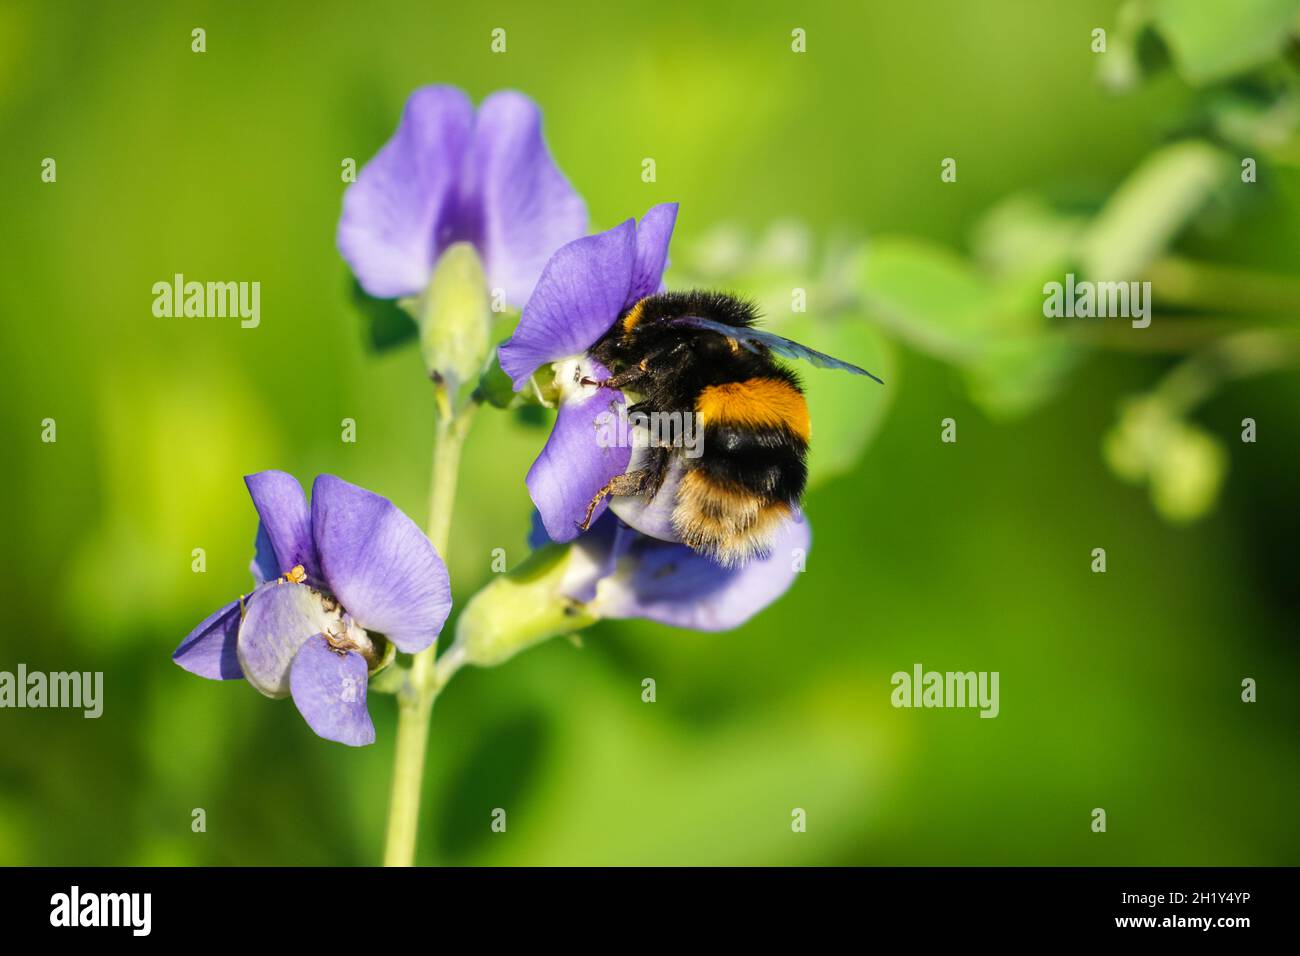 Buff-tailed bumblebee on purple flower in the meadow, Bombus terrestris bumblebee Stock Photo